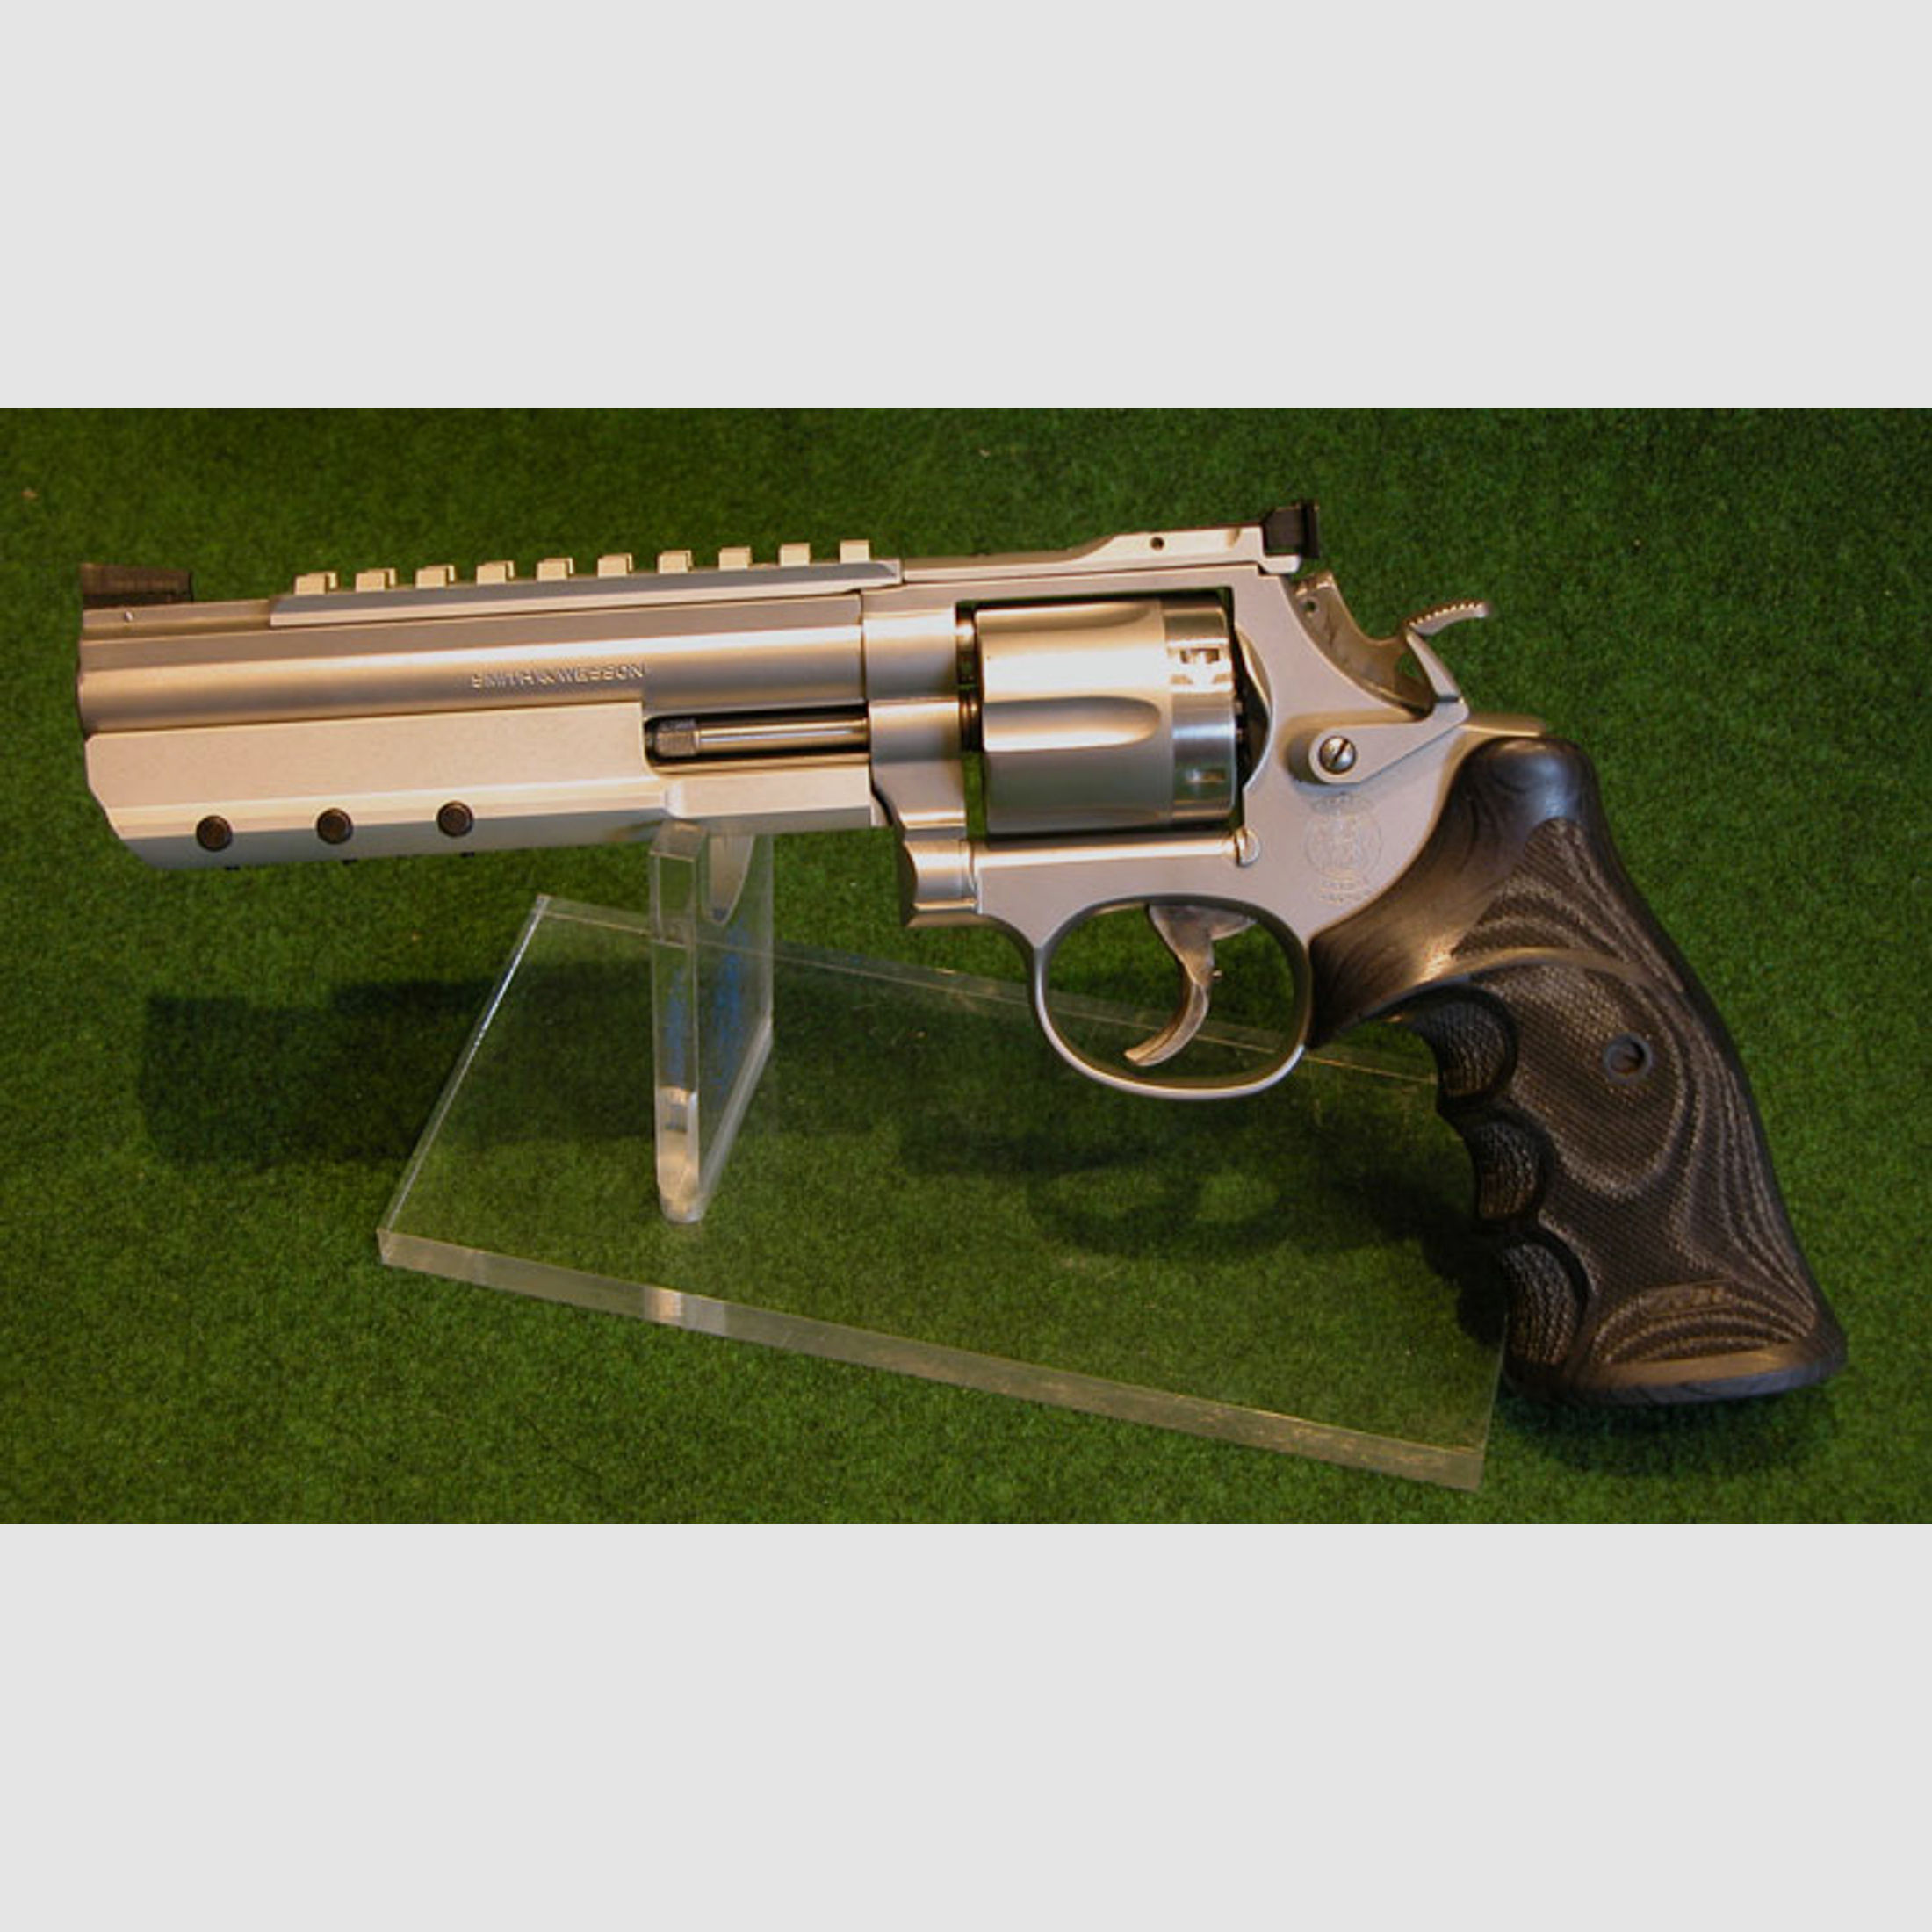 Smith & Wesson 686 -4 "GRAND CUSTOM TARGET PRO-PLUS" .357 Magnum